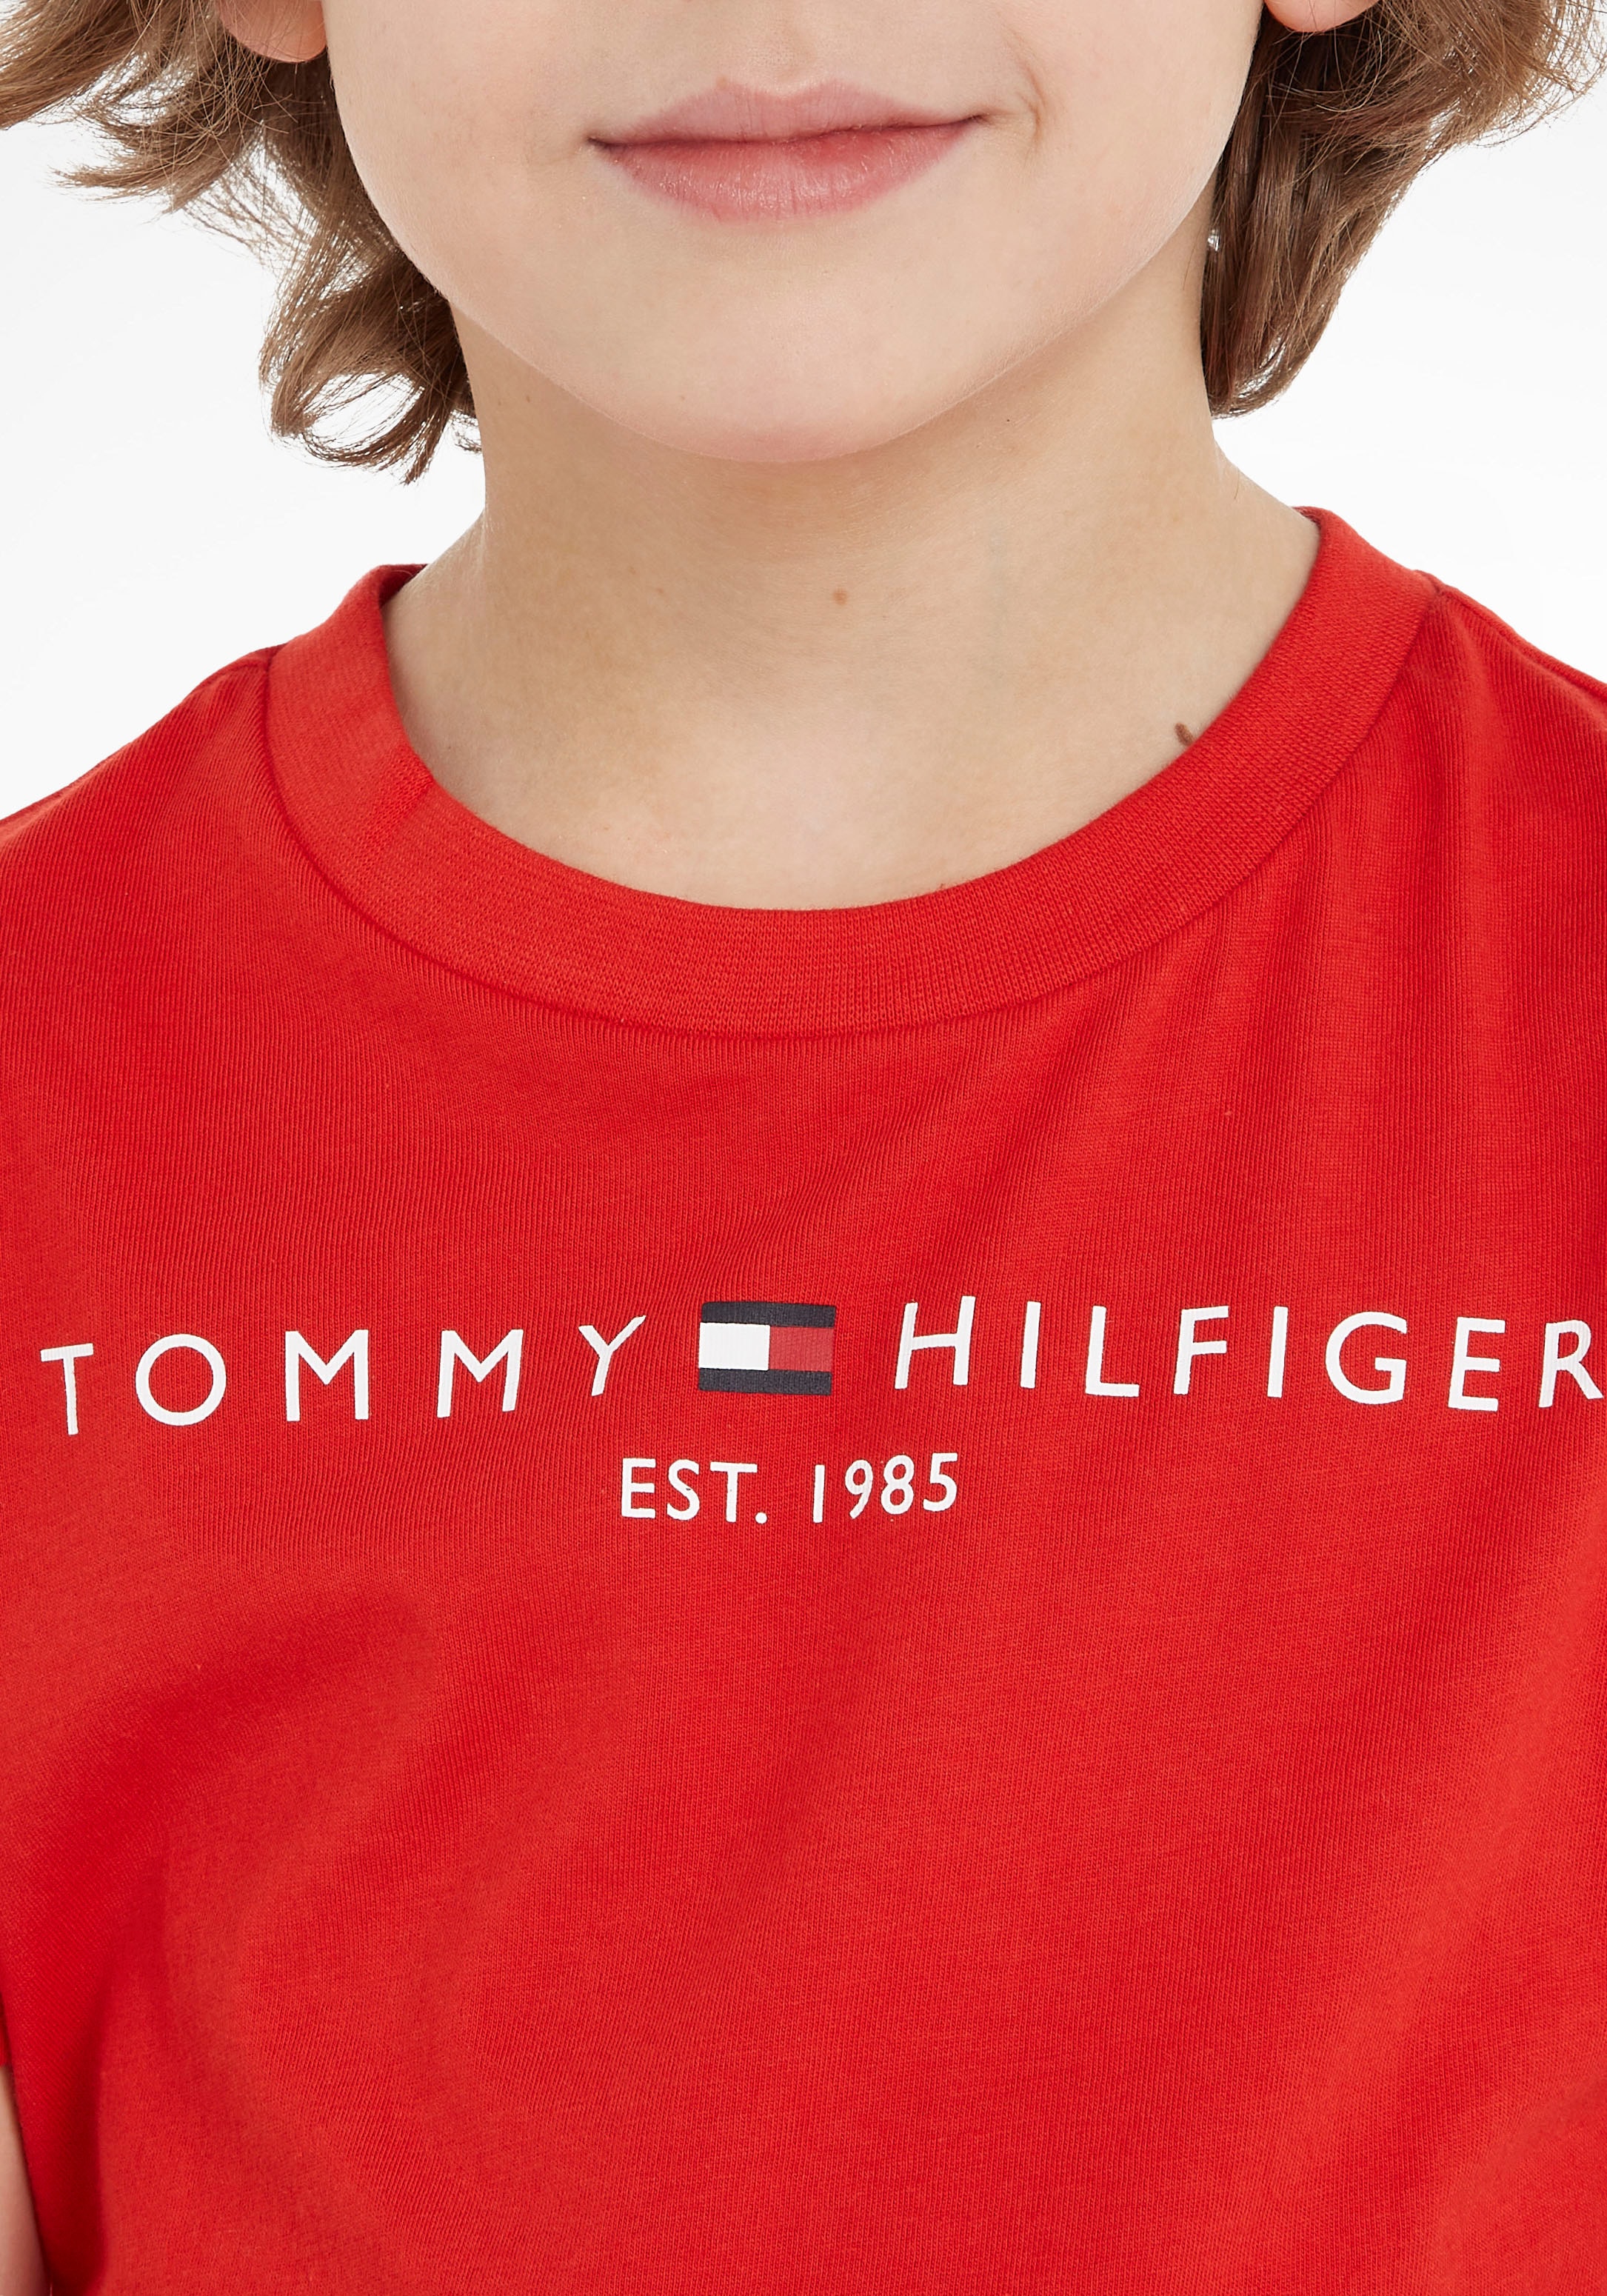 Hilfiger Tommy OTTO bei T-Shirt